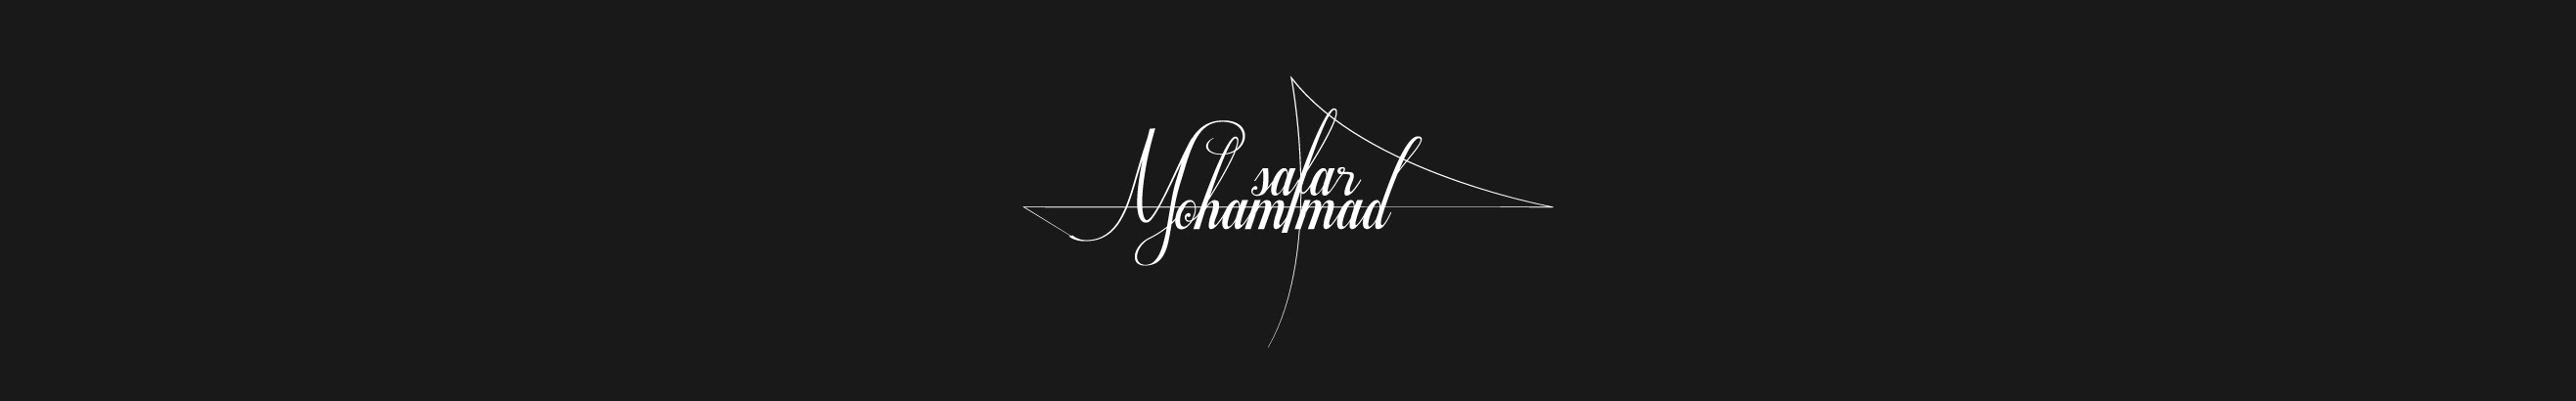 Mohammad Safar's profile banner